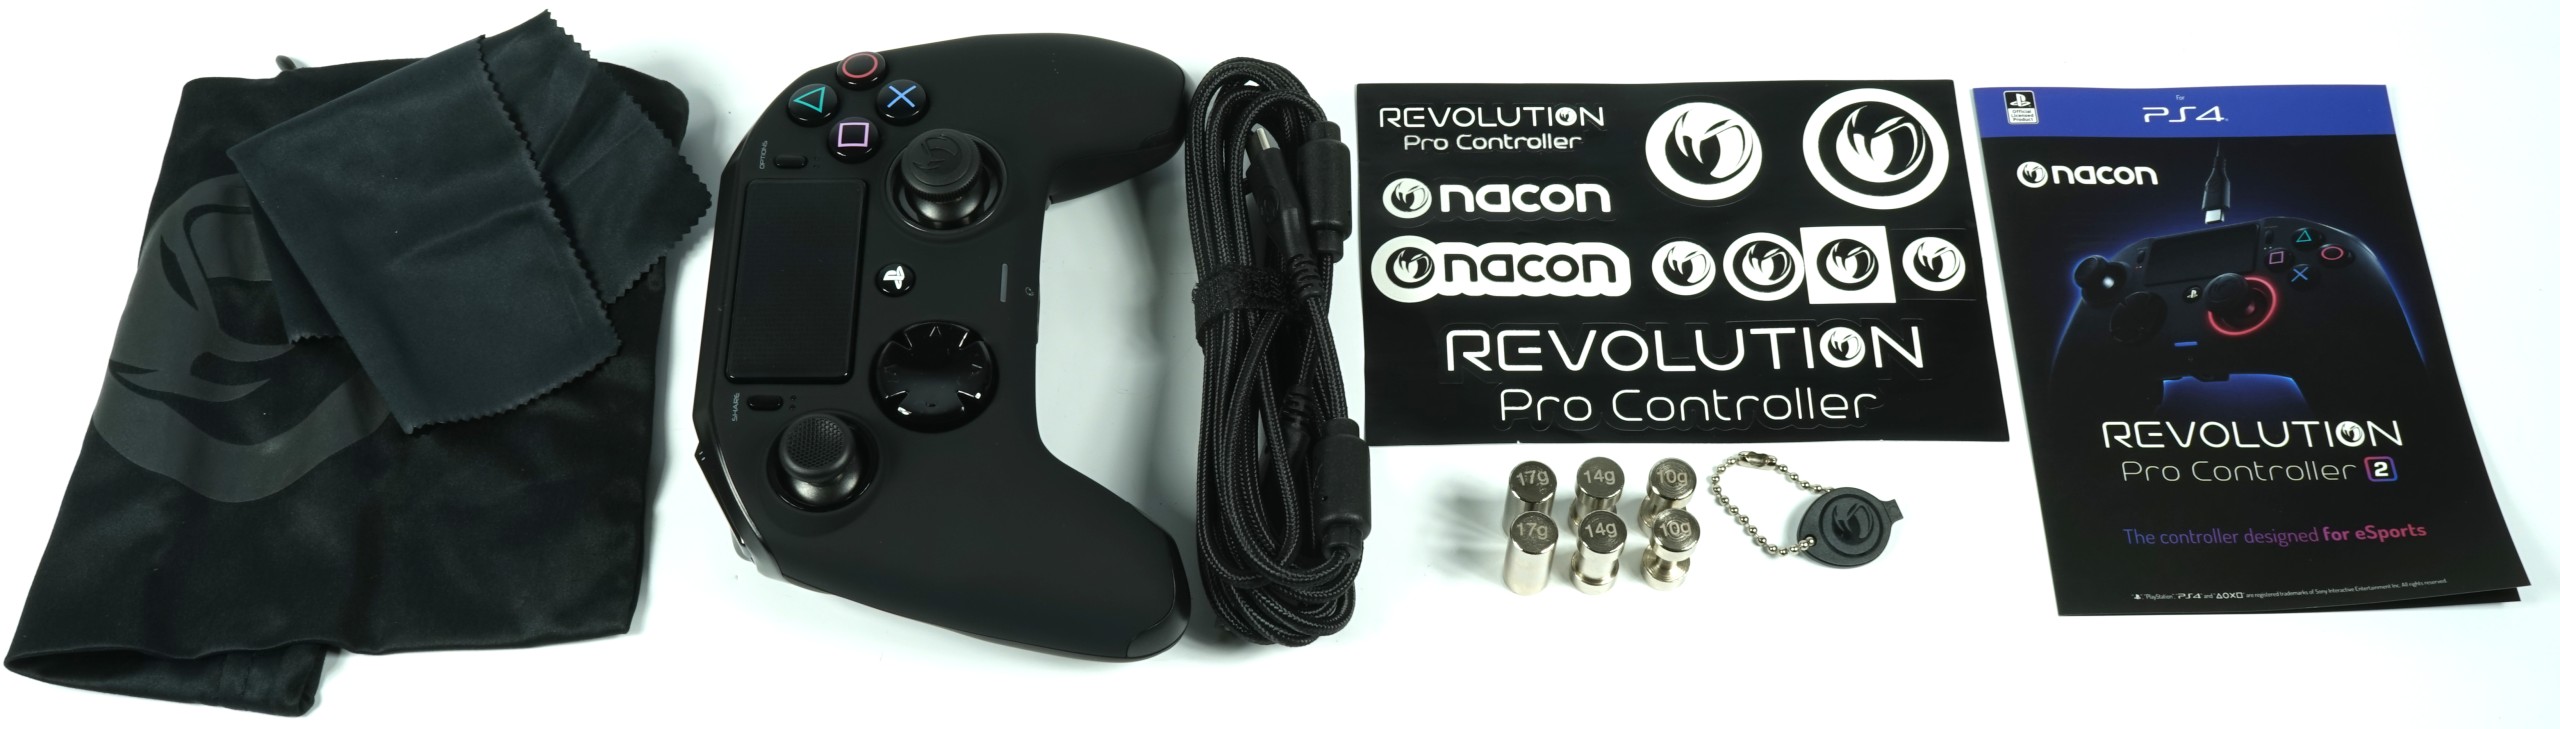 nacon revolution 2 pro